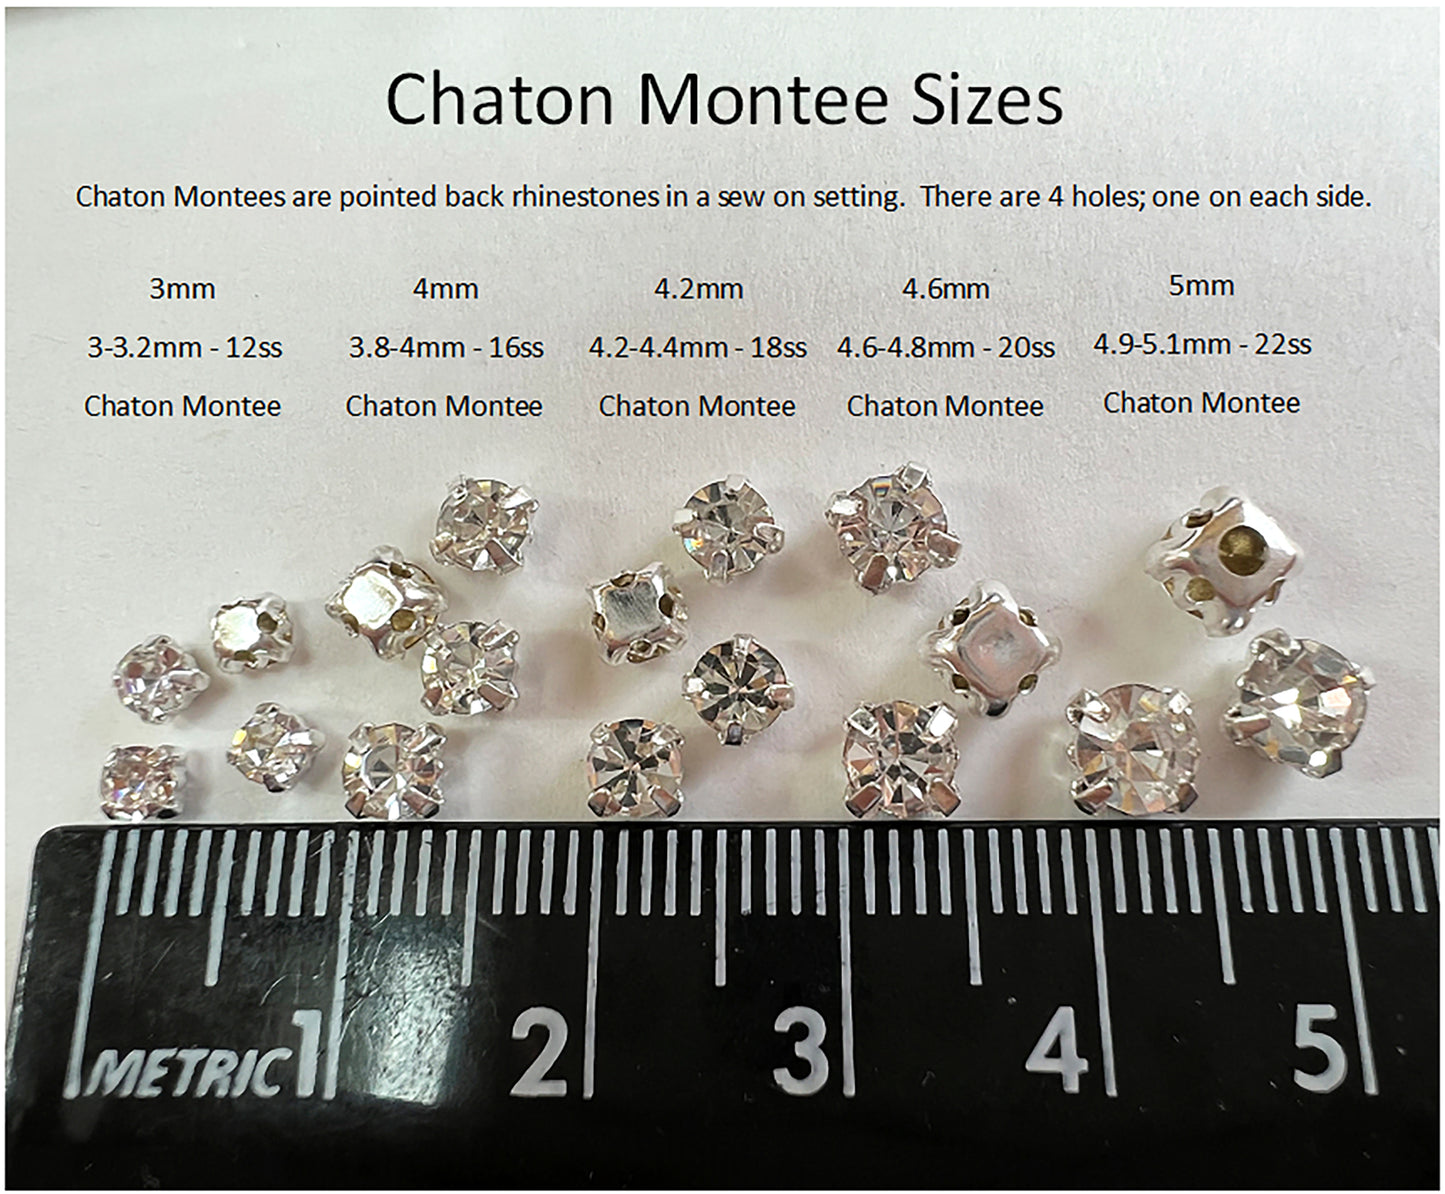 Glass Chaton Montee 16ss (3.8-4mm) - choose color & quantity